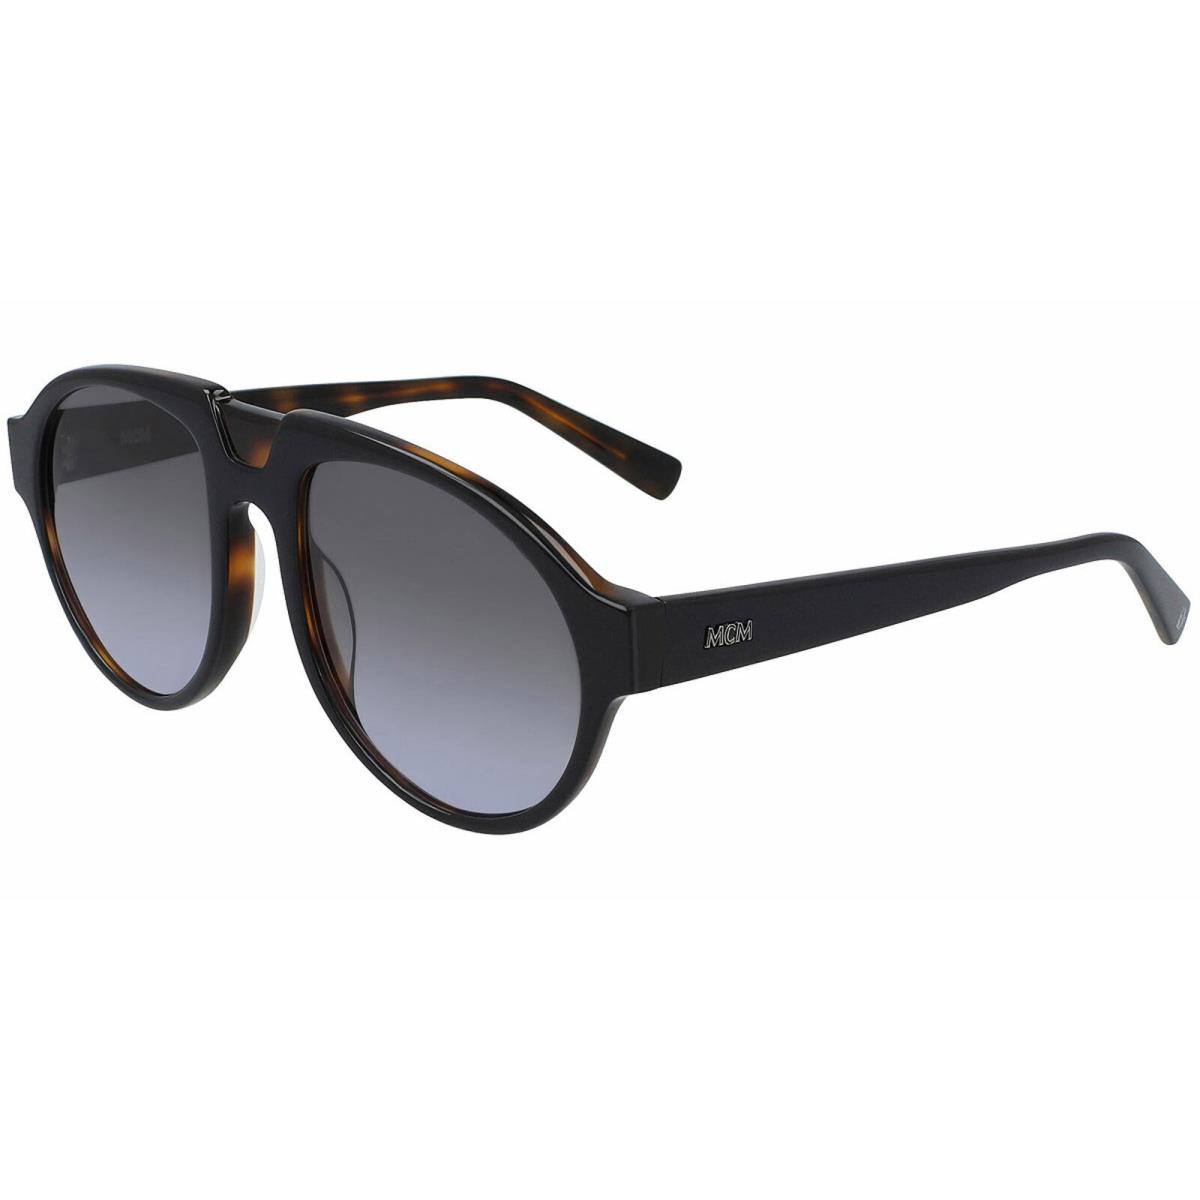 Mcm MCM692S-019 Women`s Black Havana Sunglasses Grey Lens